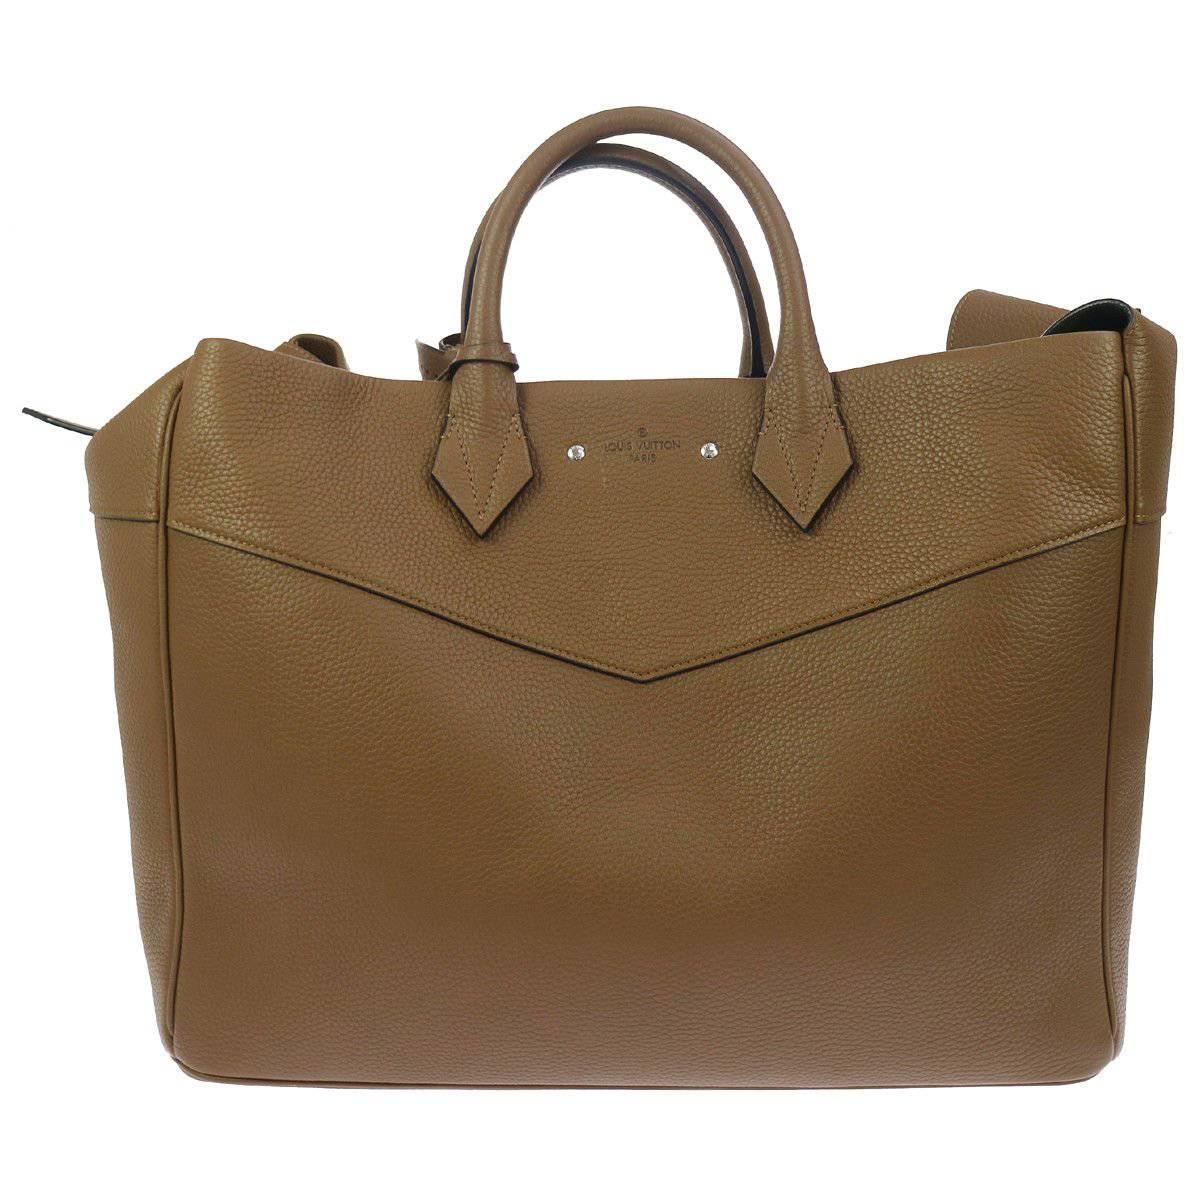 Louis Vuitton New Tan Leather Men's Women's Travel Weekender Carryall Bag